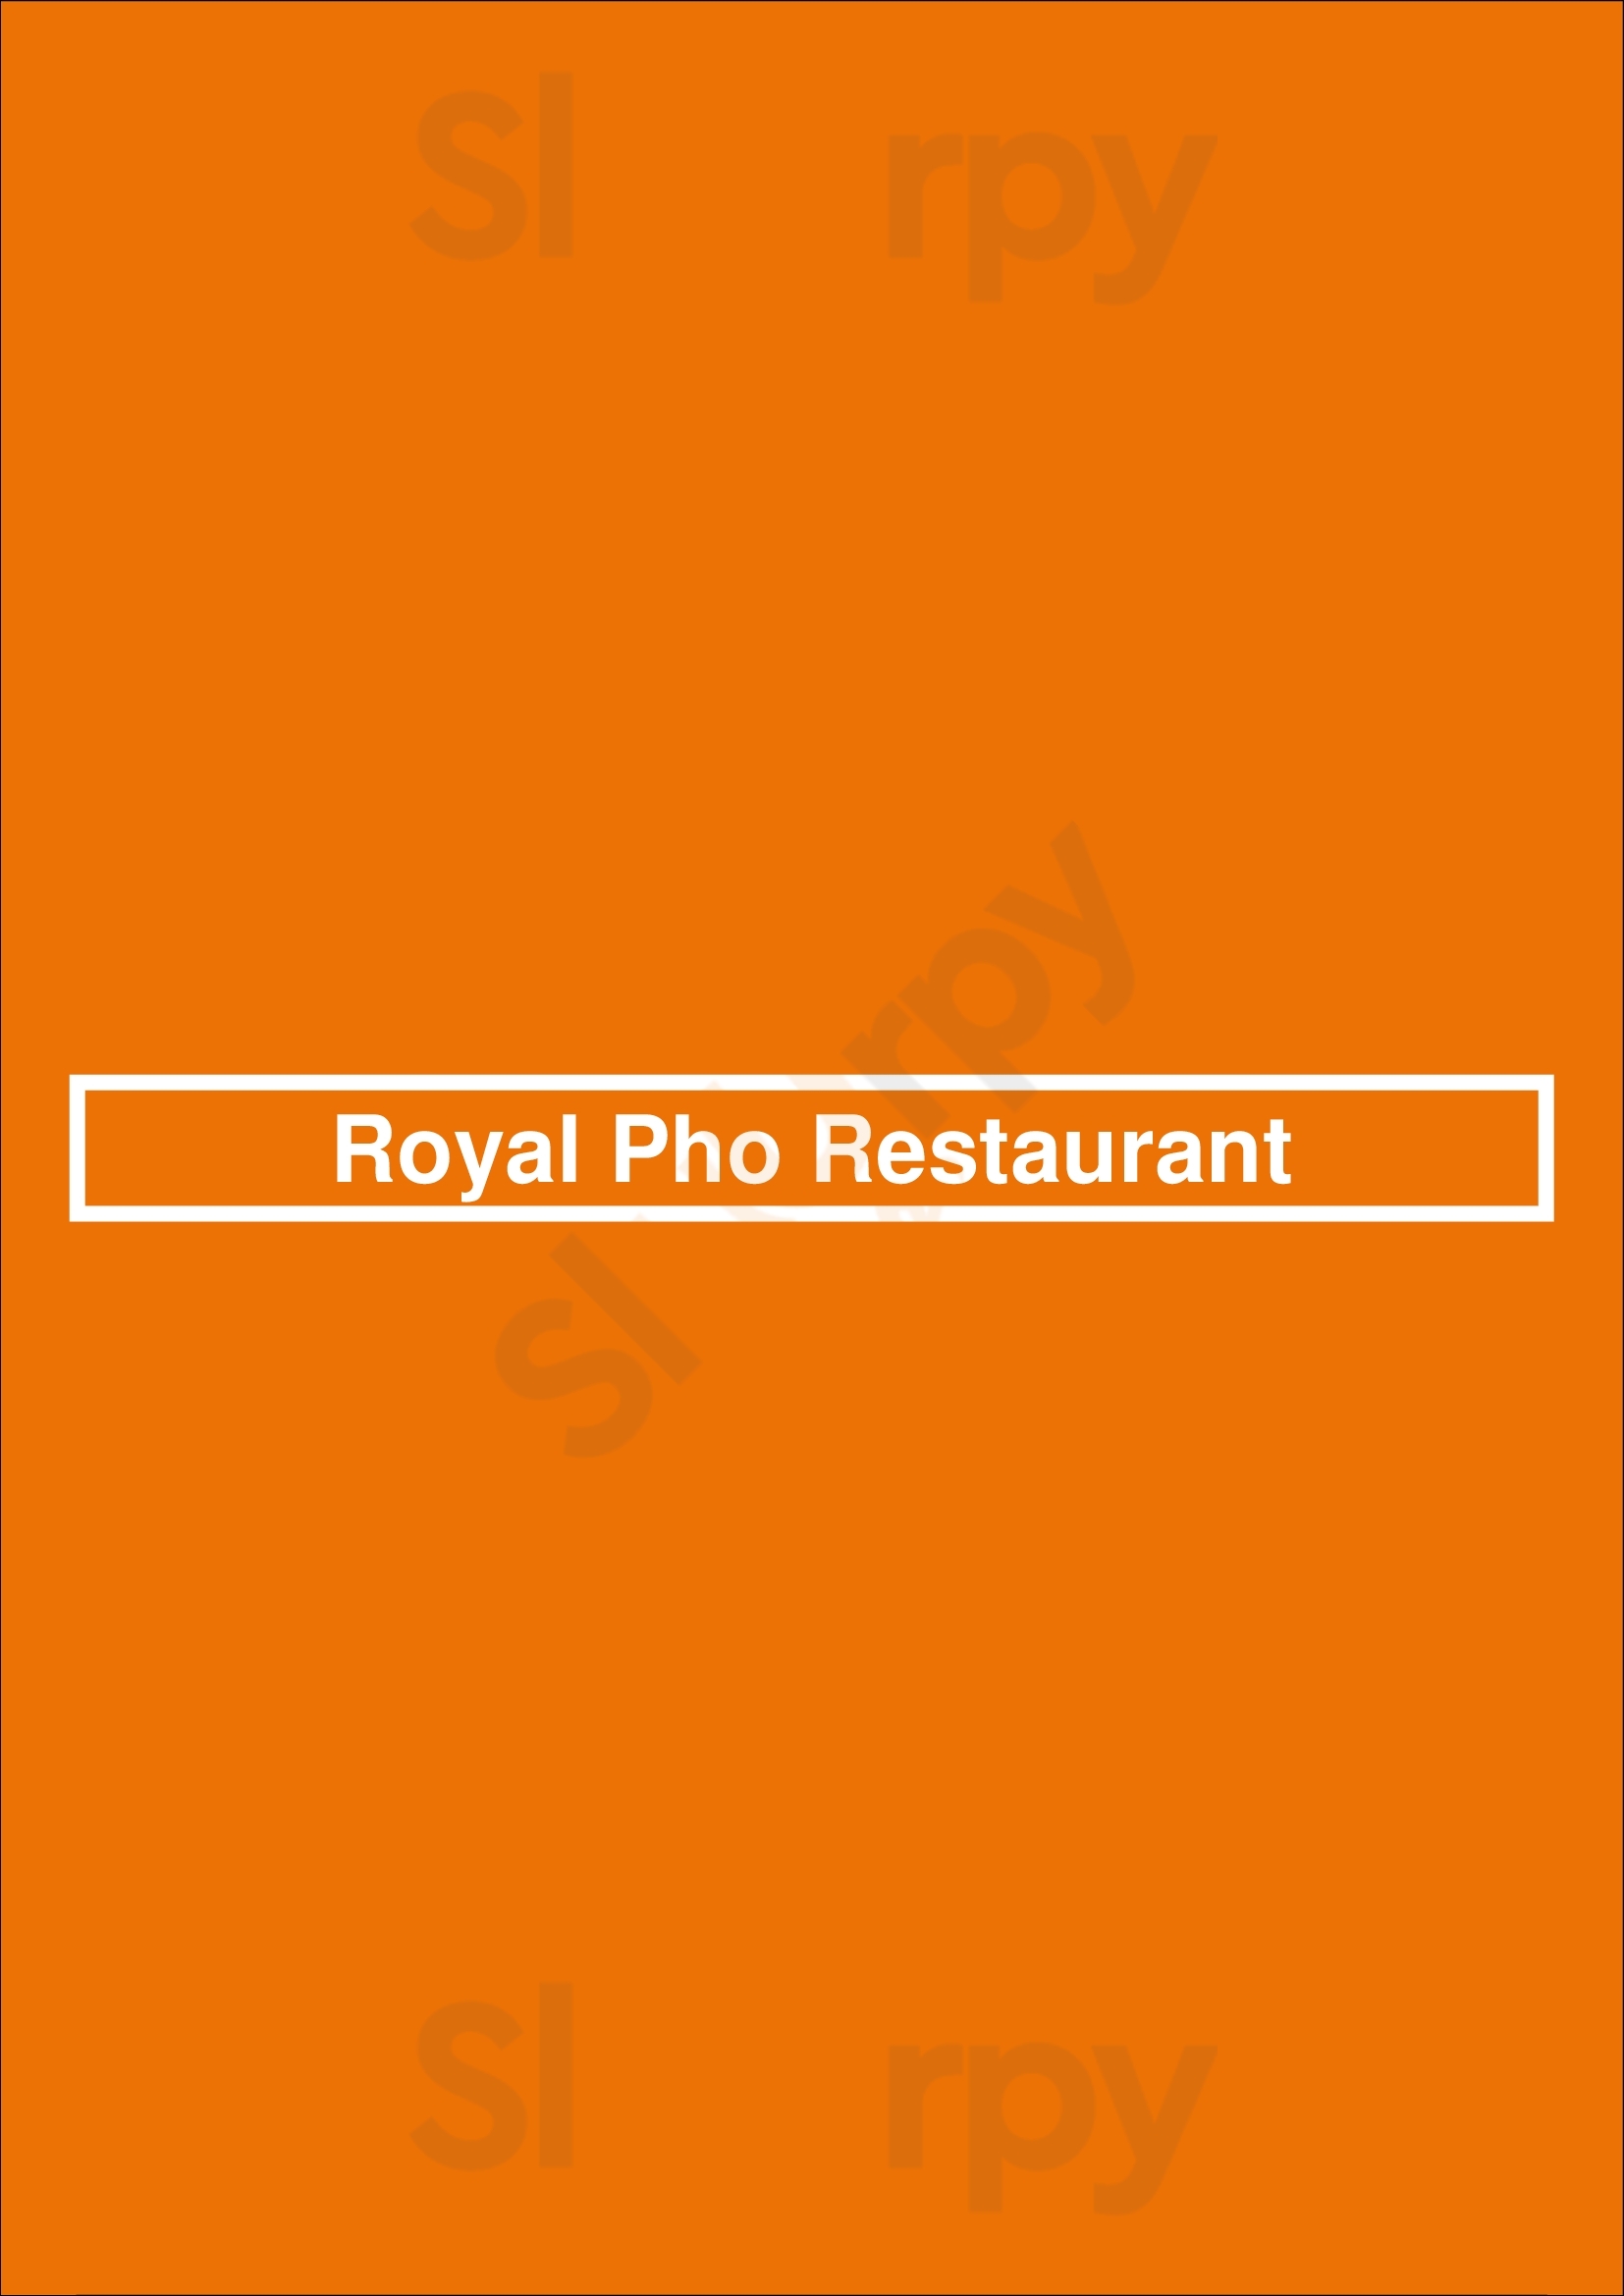 Royal Pho Restaurant Vancouver Menu - 1